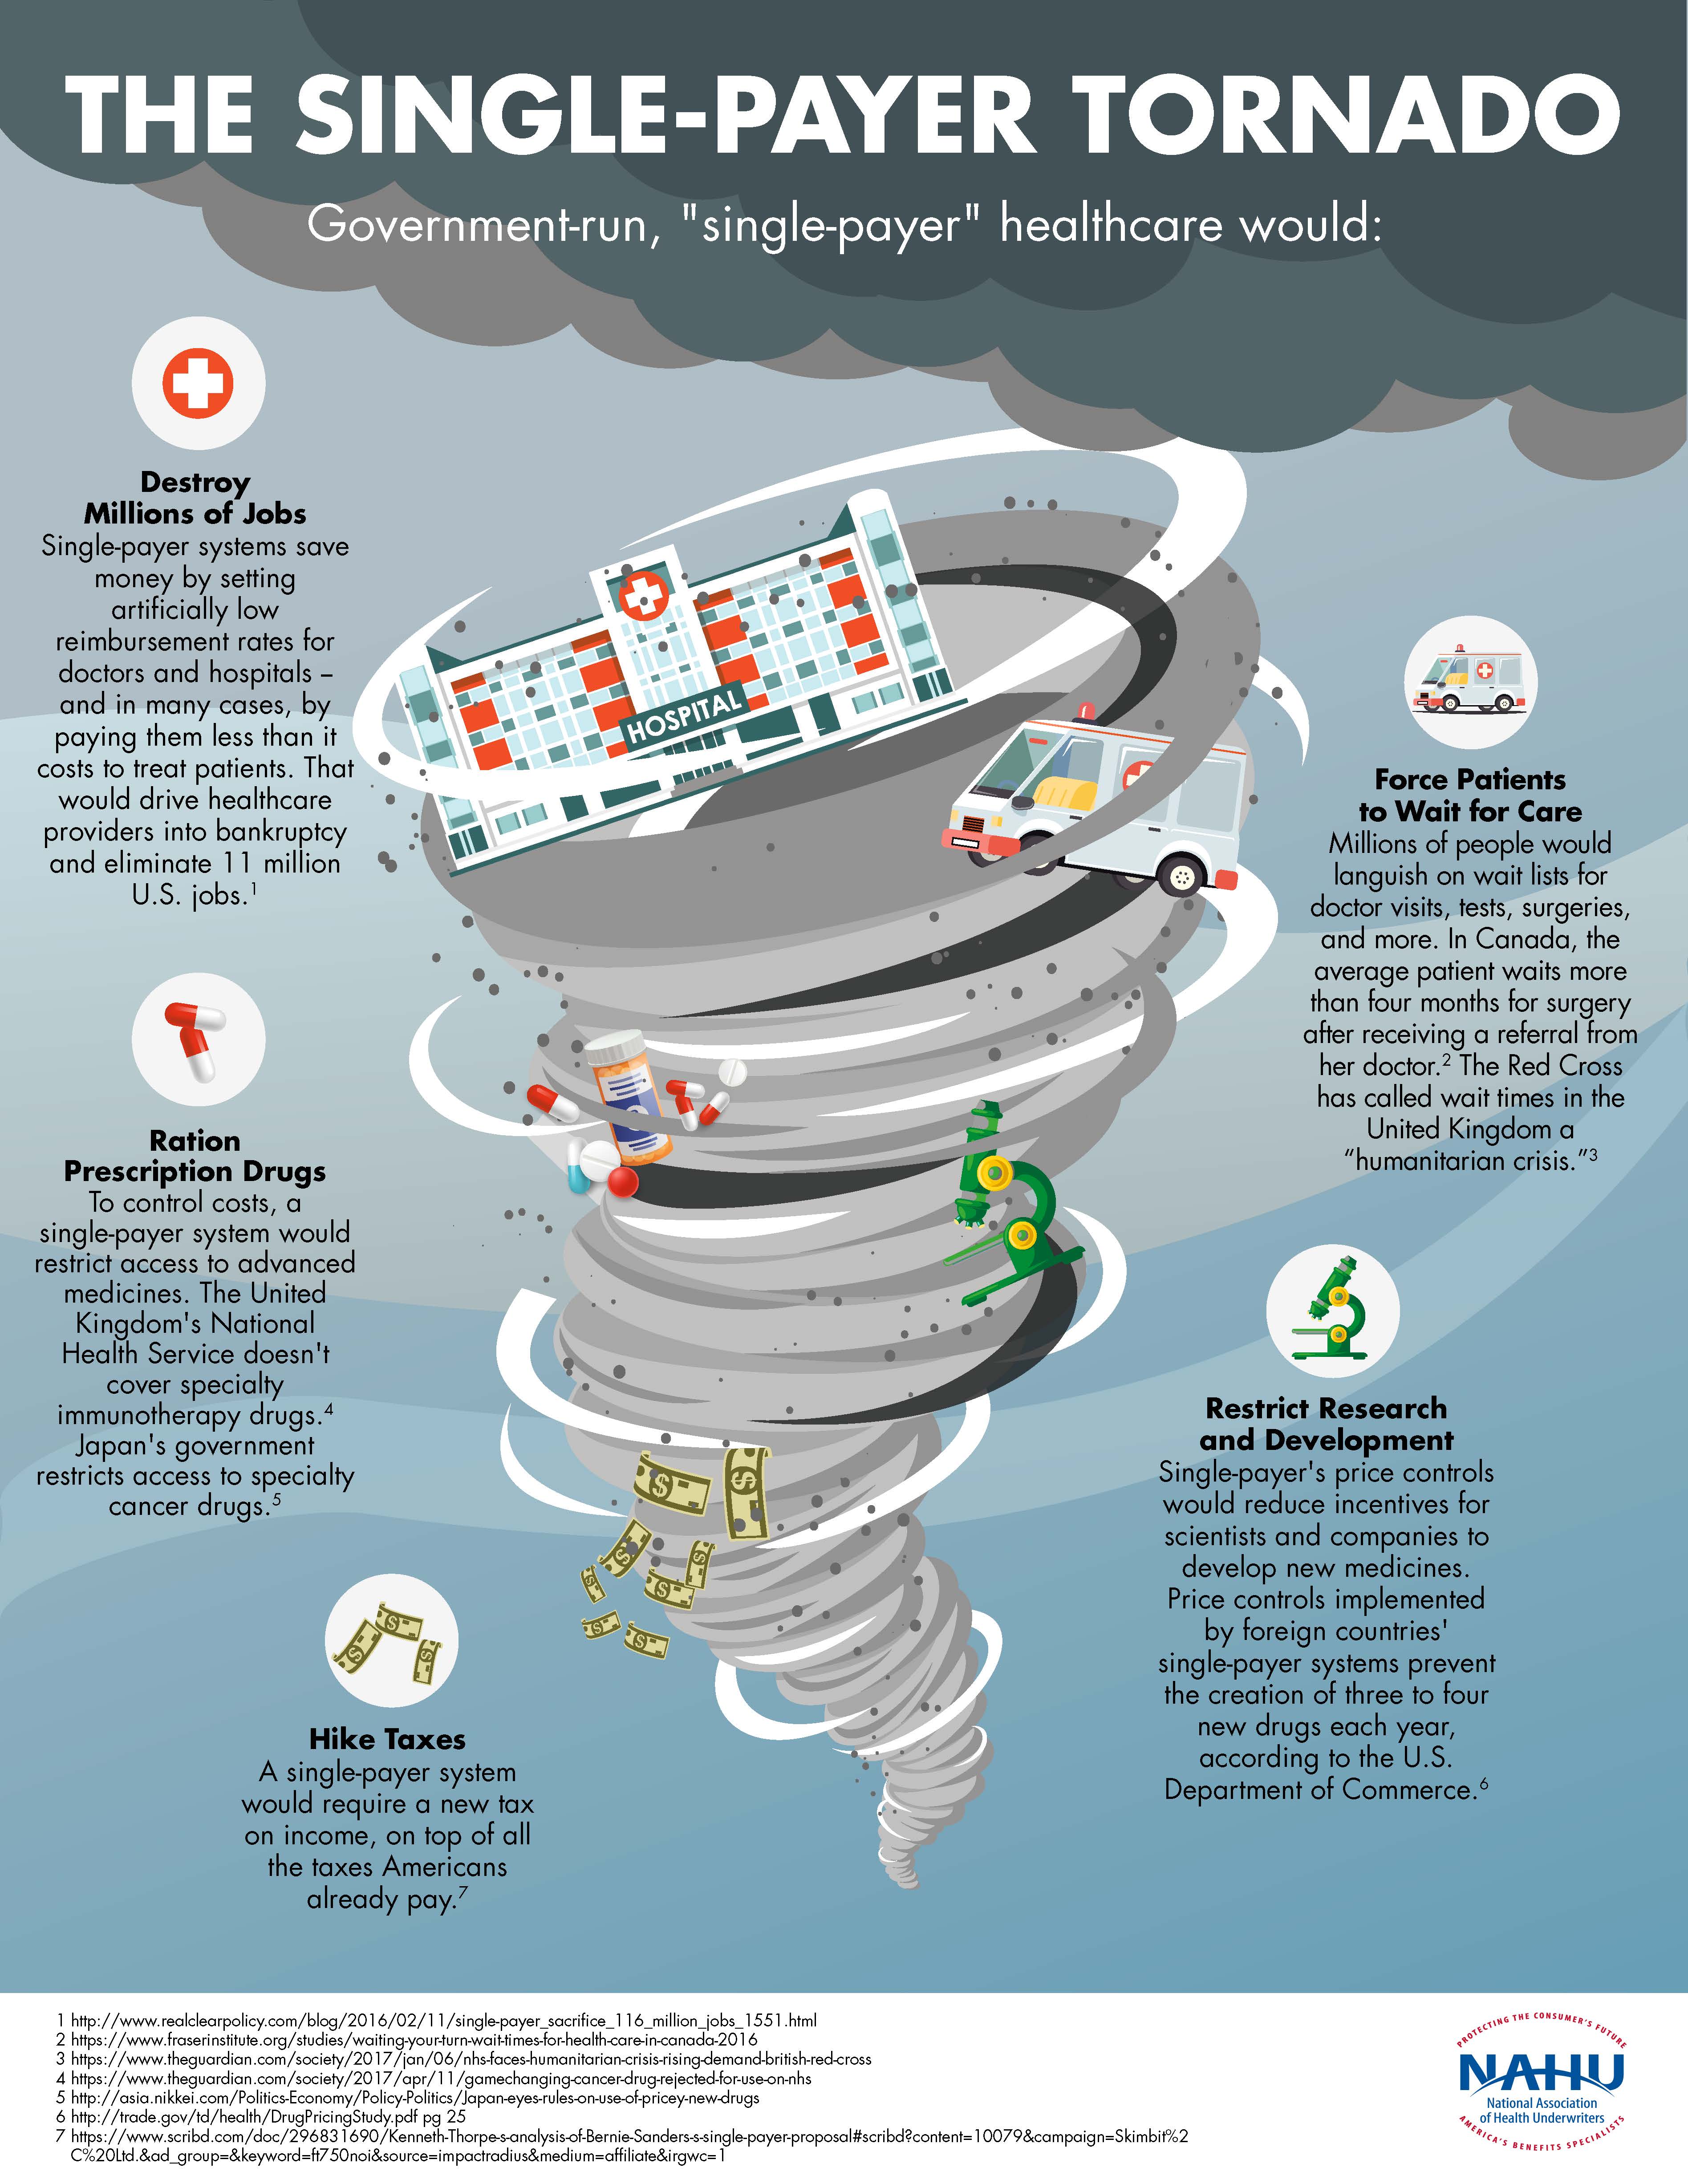 singlepayer tornado infographic